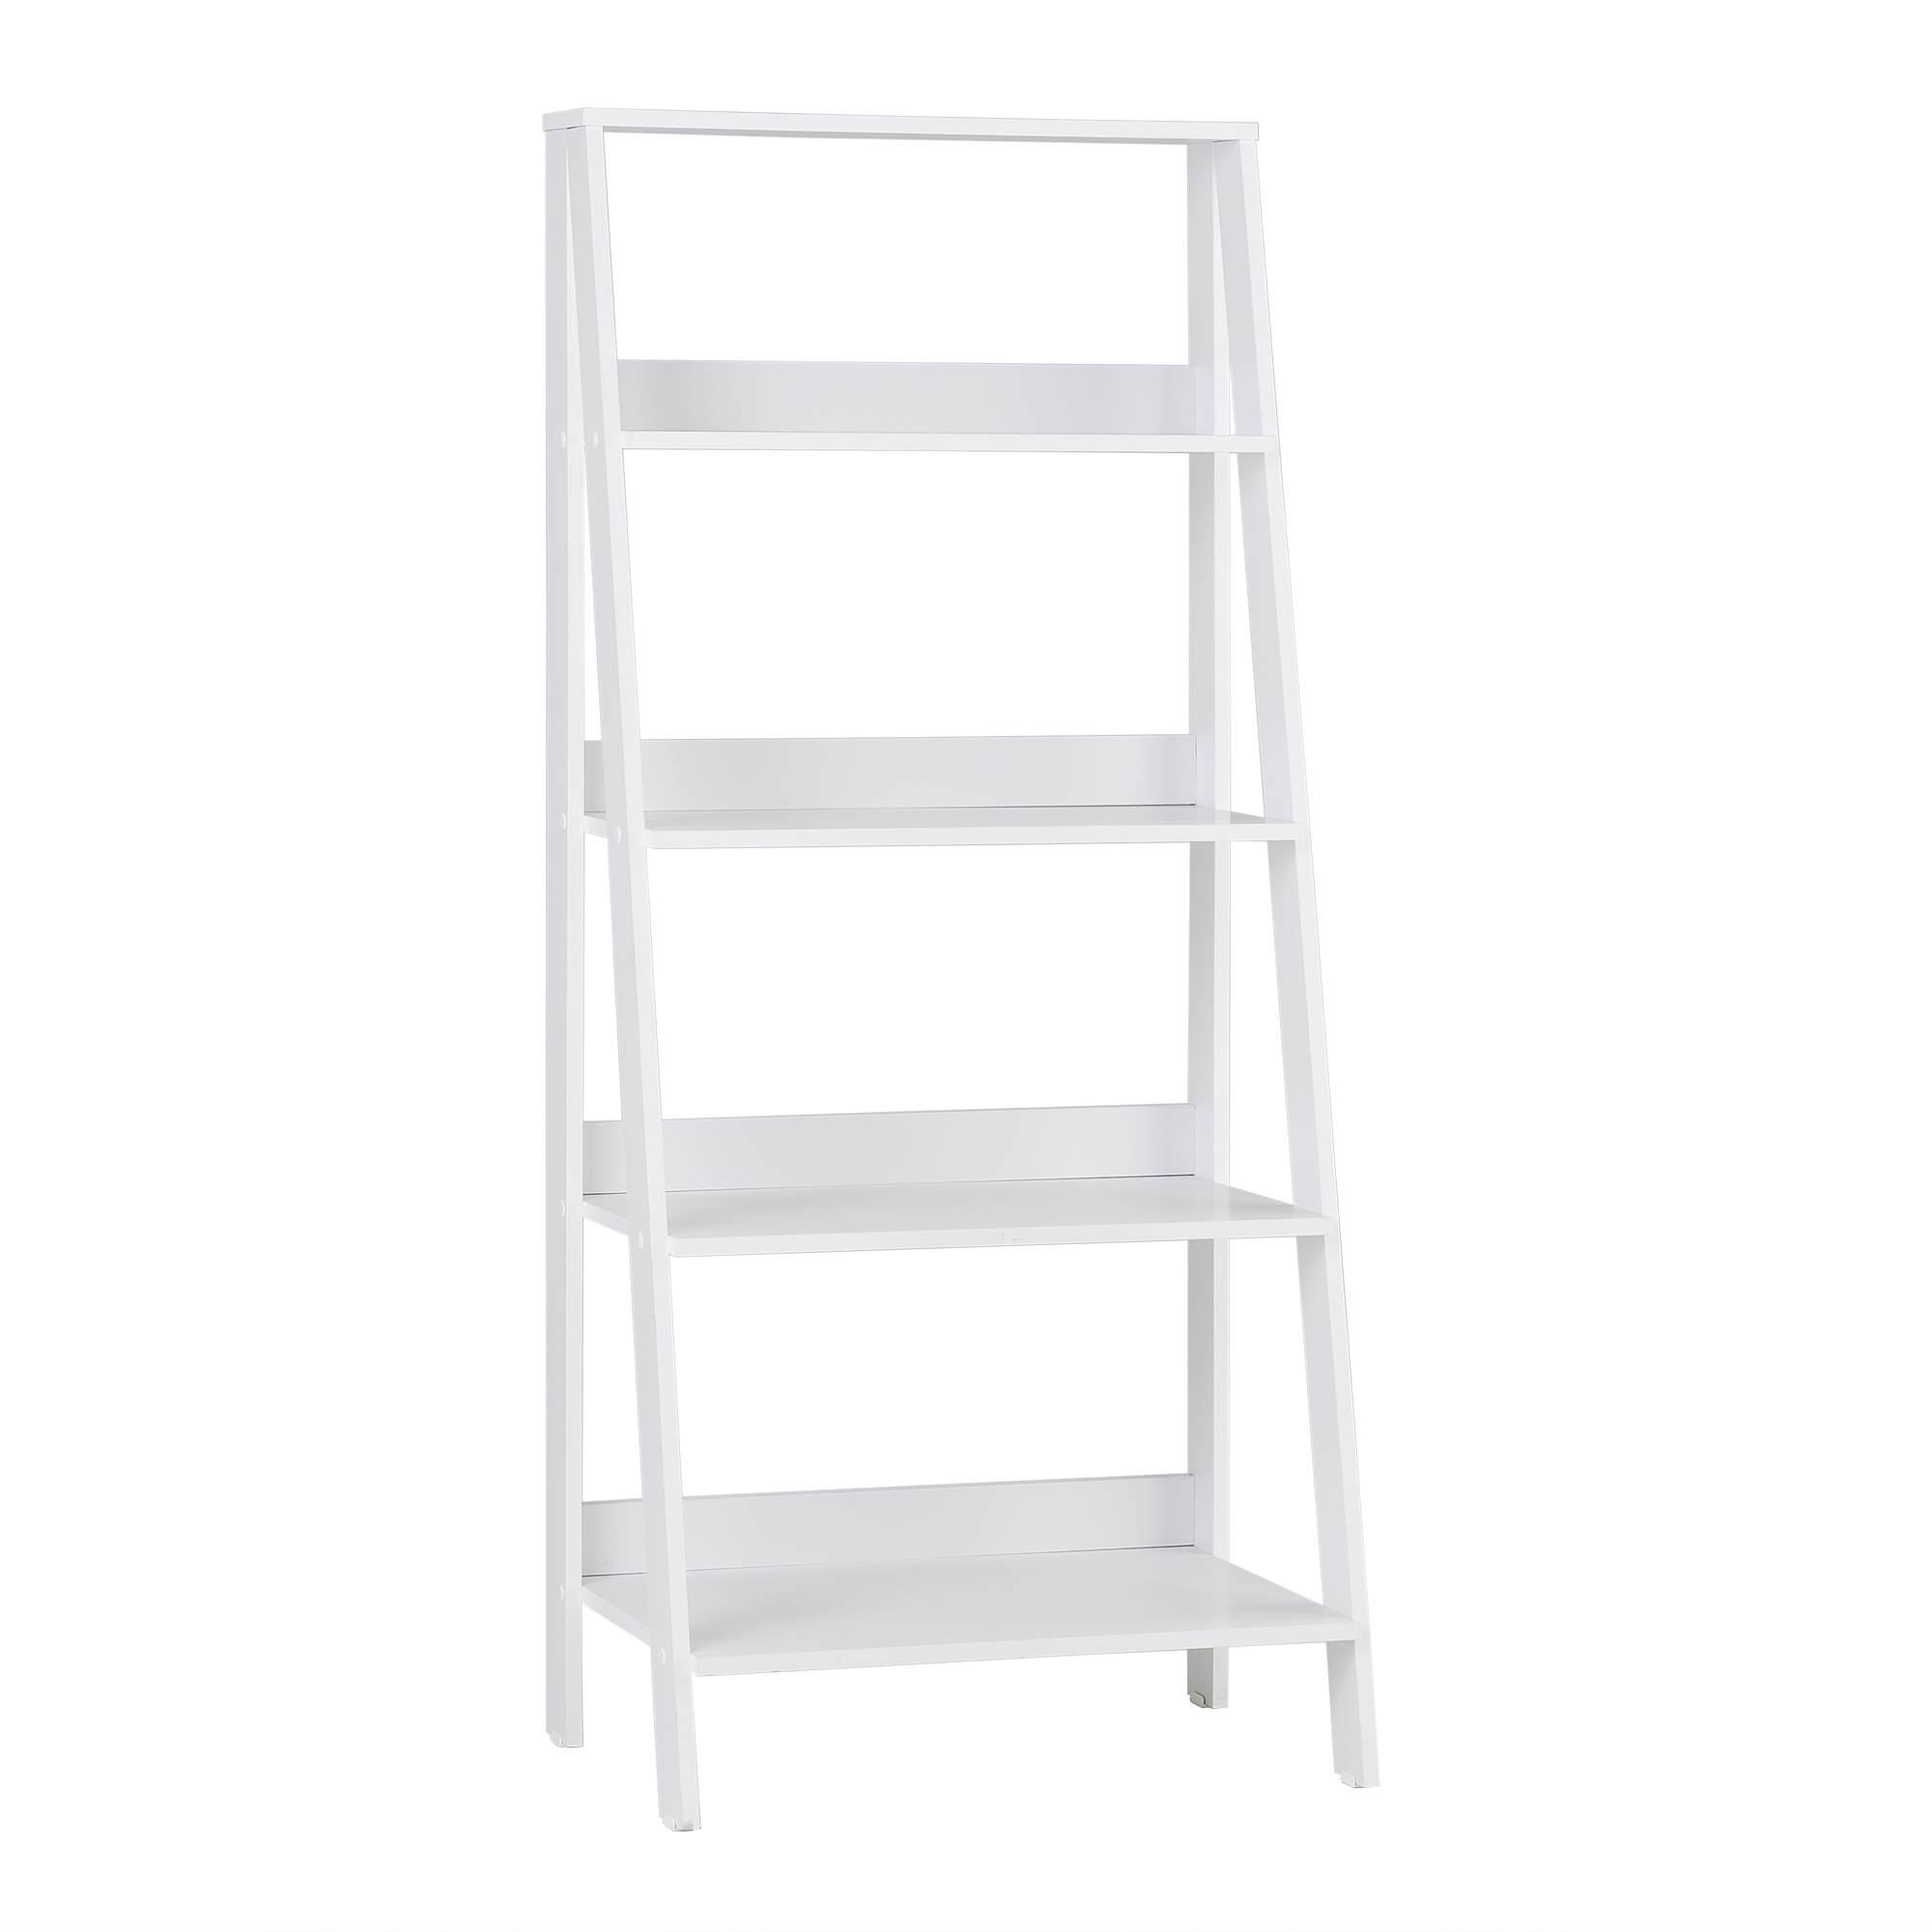 55" Modern Wood Ladder Bookshelf - White - Image 1